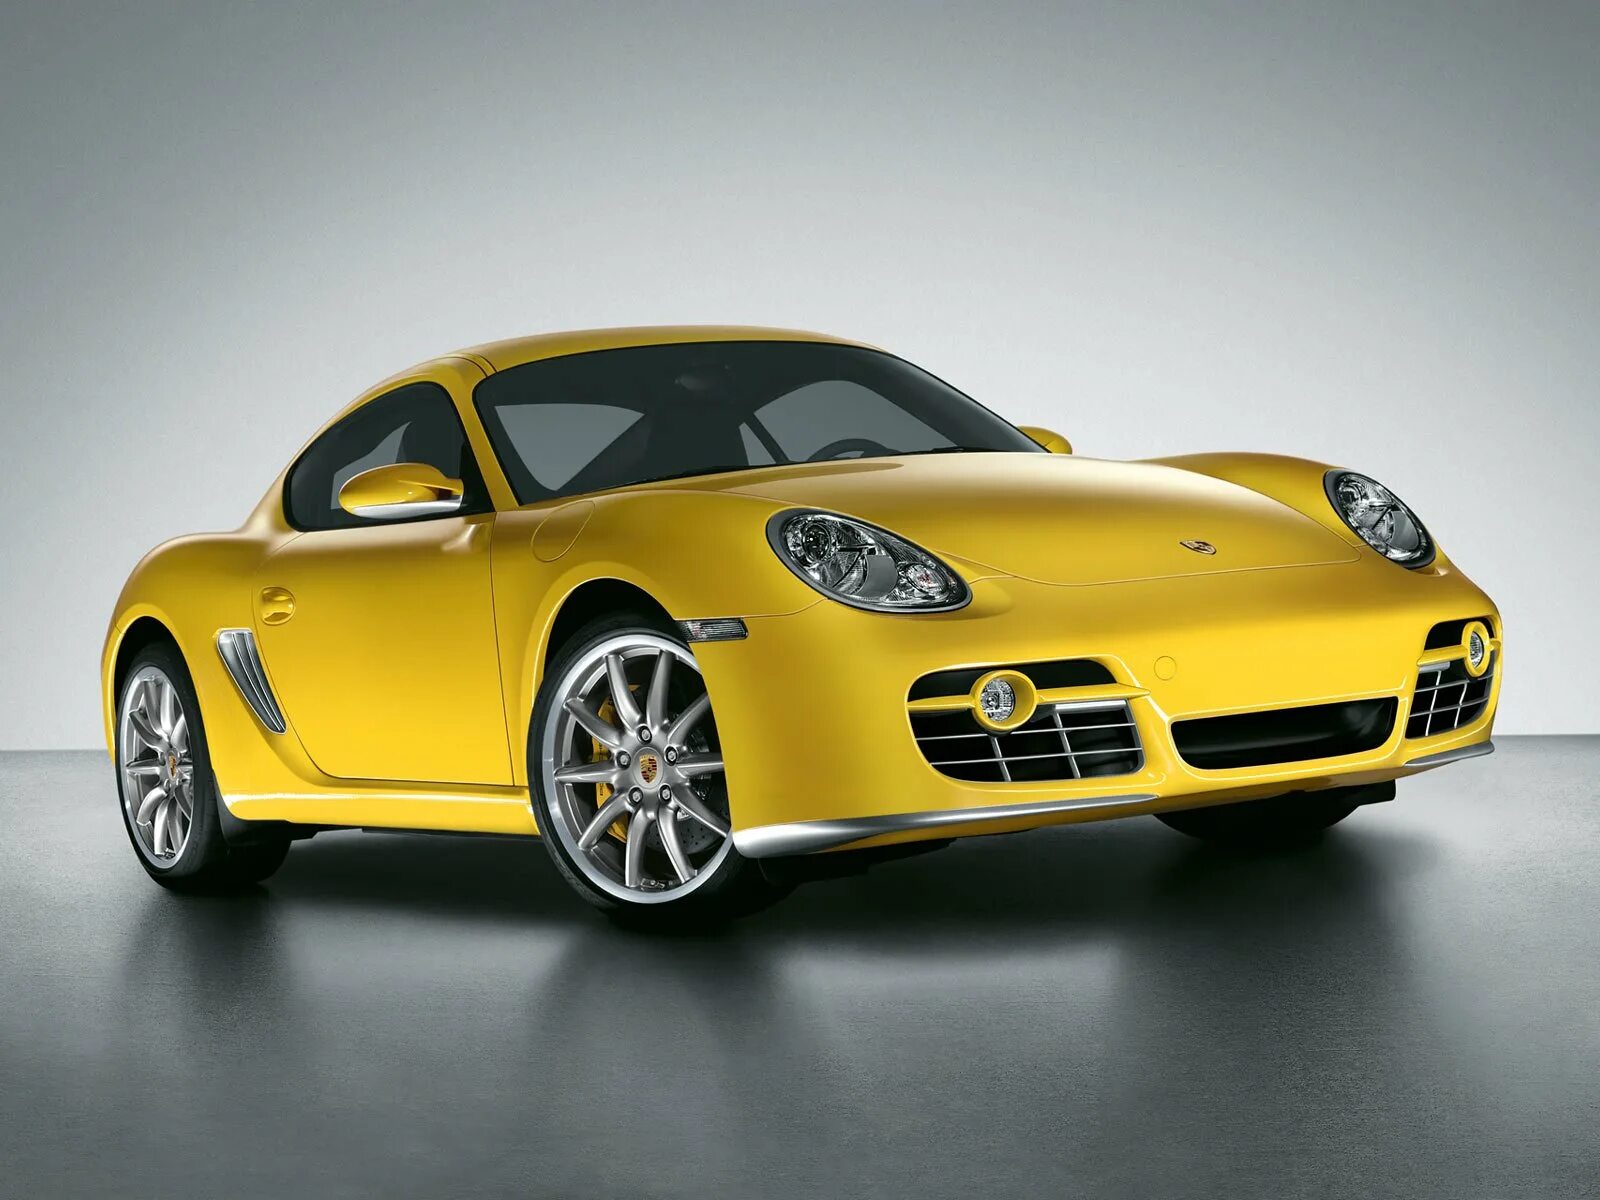 Porsche 911 Yellow. Порше 911 золотой. Порше 911 желтый. Porsche 911 Cayman.